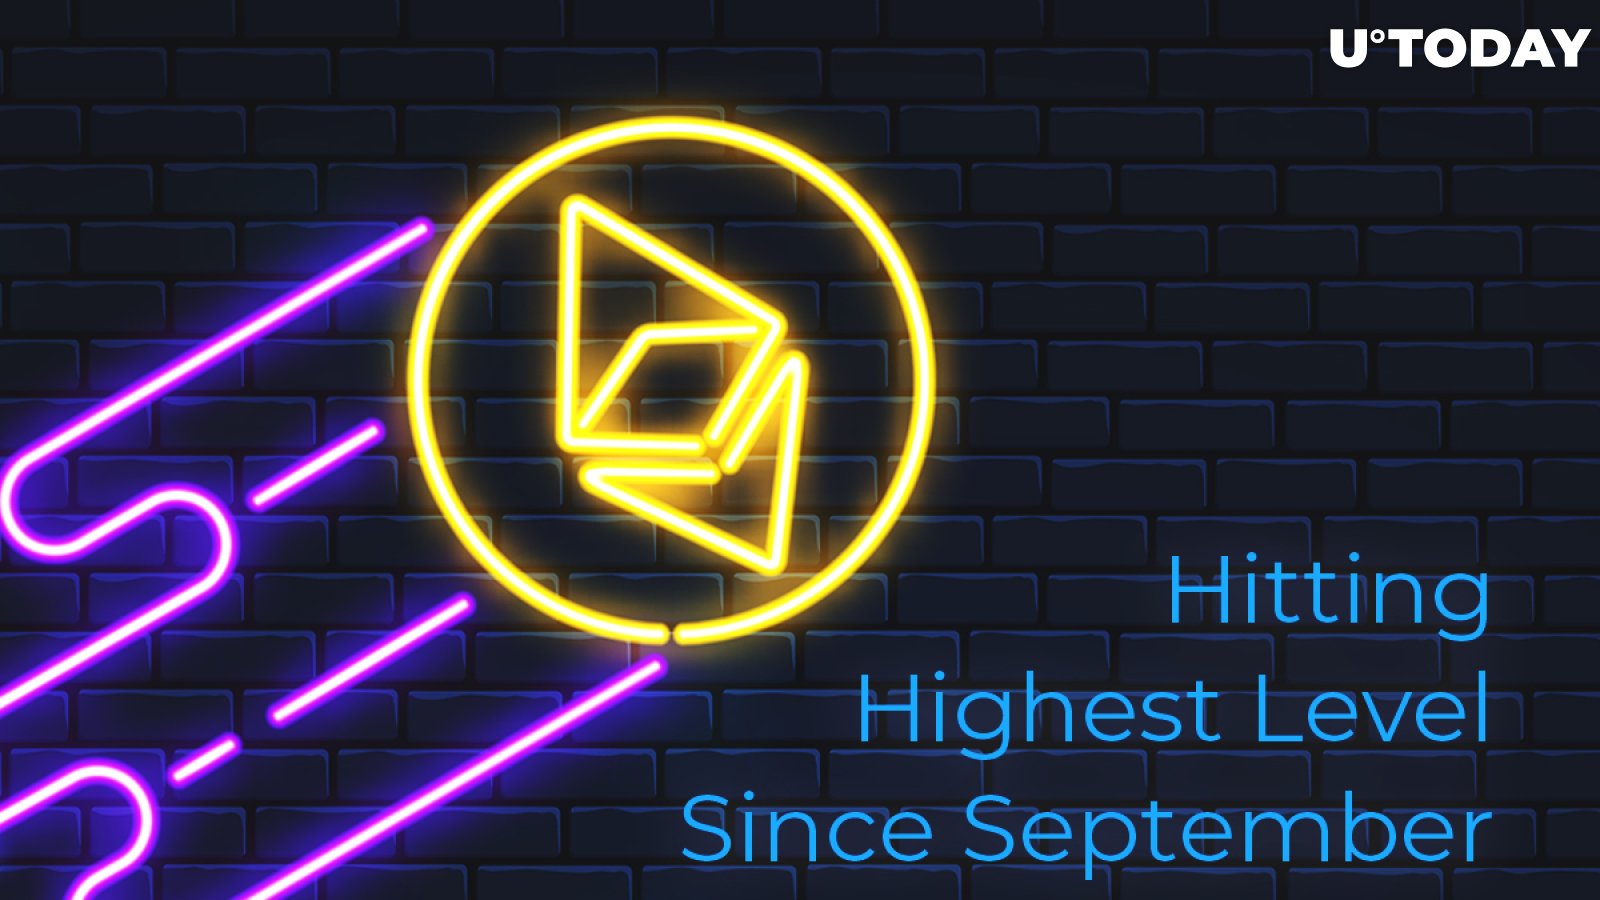 Ethereum Price Shows Good Growth Hitting Highest Level Since September - Is it Bullish on Upgrades?